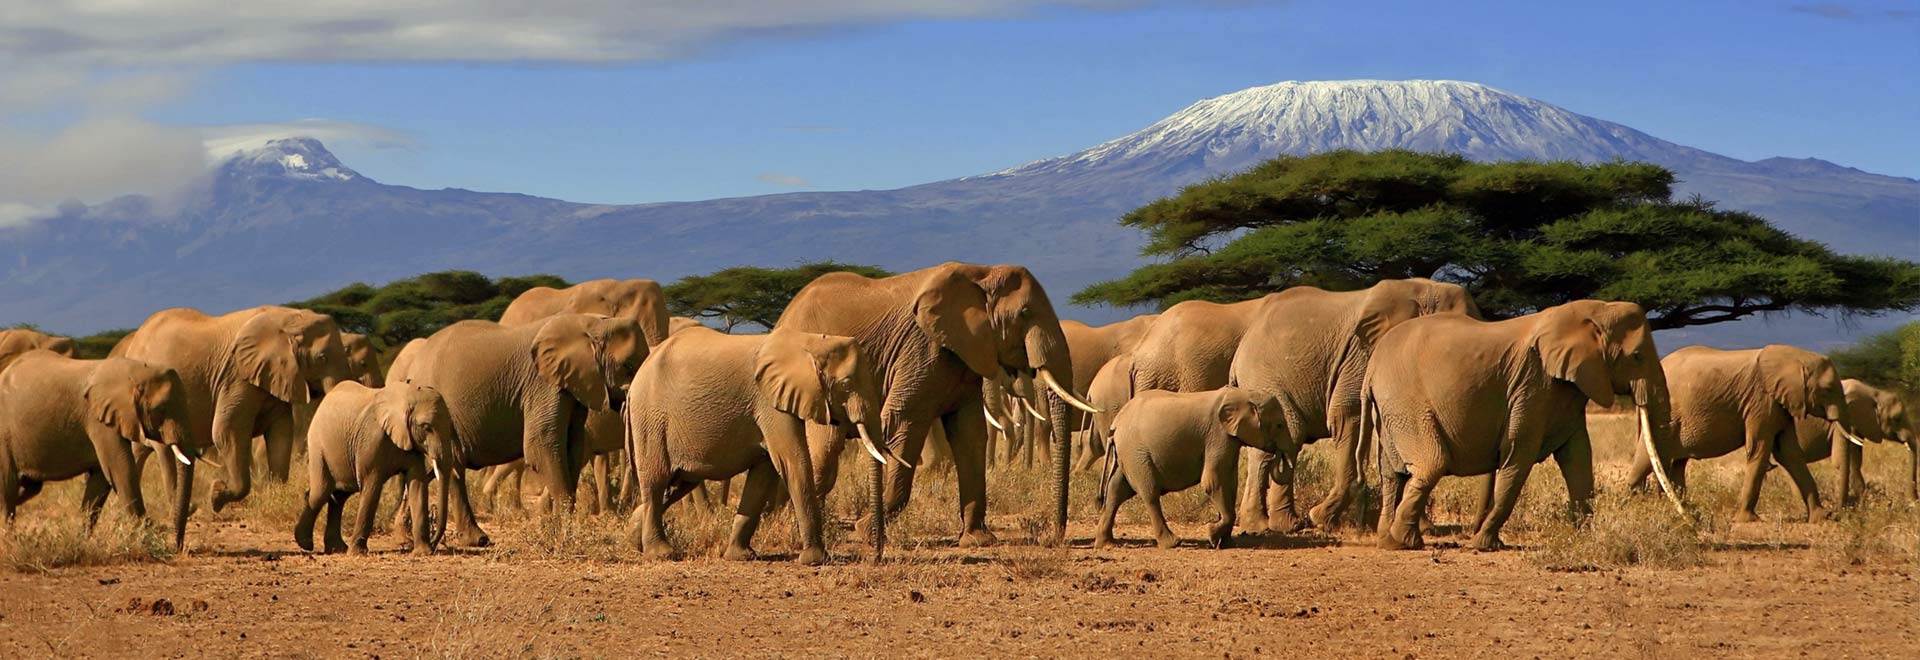 Kenya tanzania wildlife safari abercrombie kent